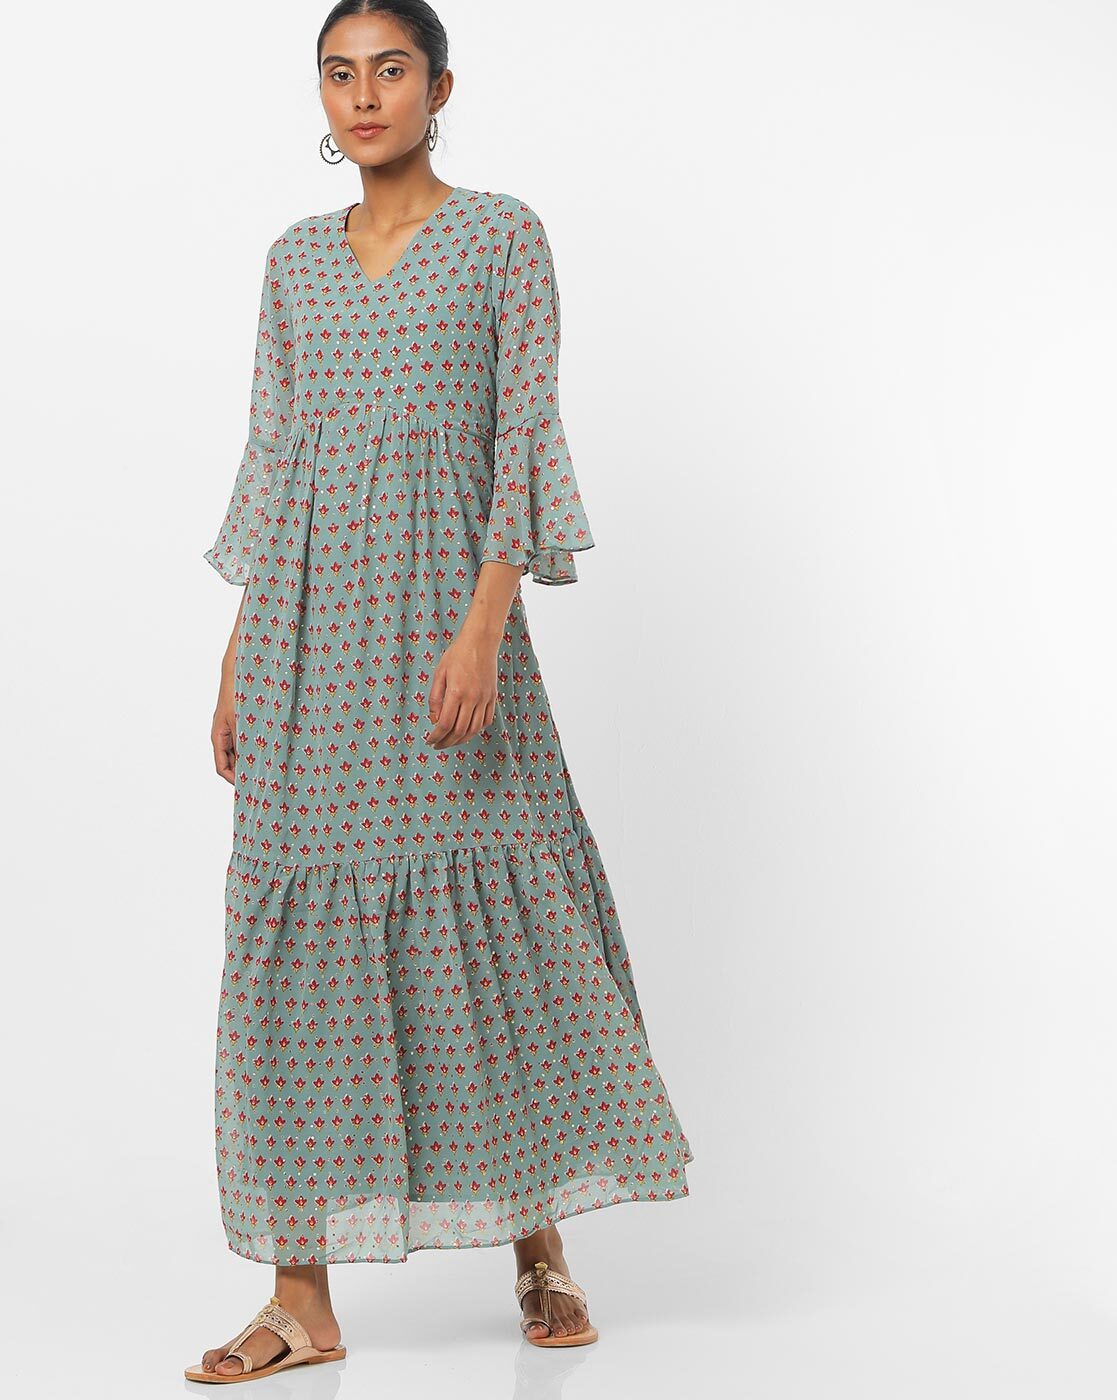 Buy global desi Women's Rayon a-line Maxi Dress  (SS17V25768MXR05INDIGOL_Indigo_L) at Amazon.in